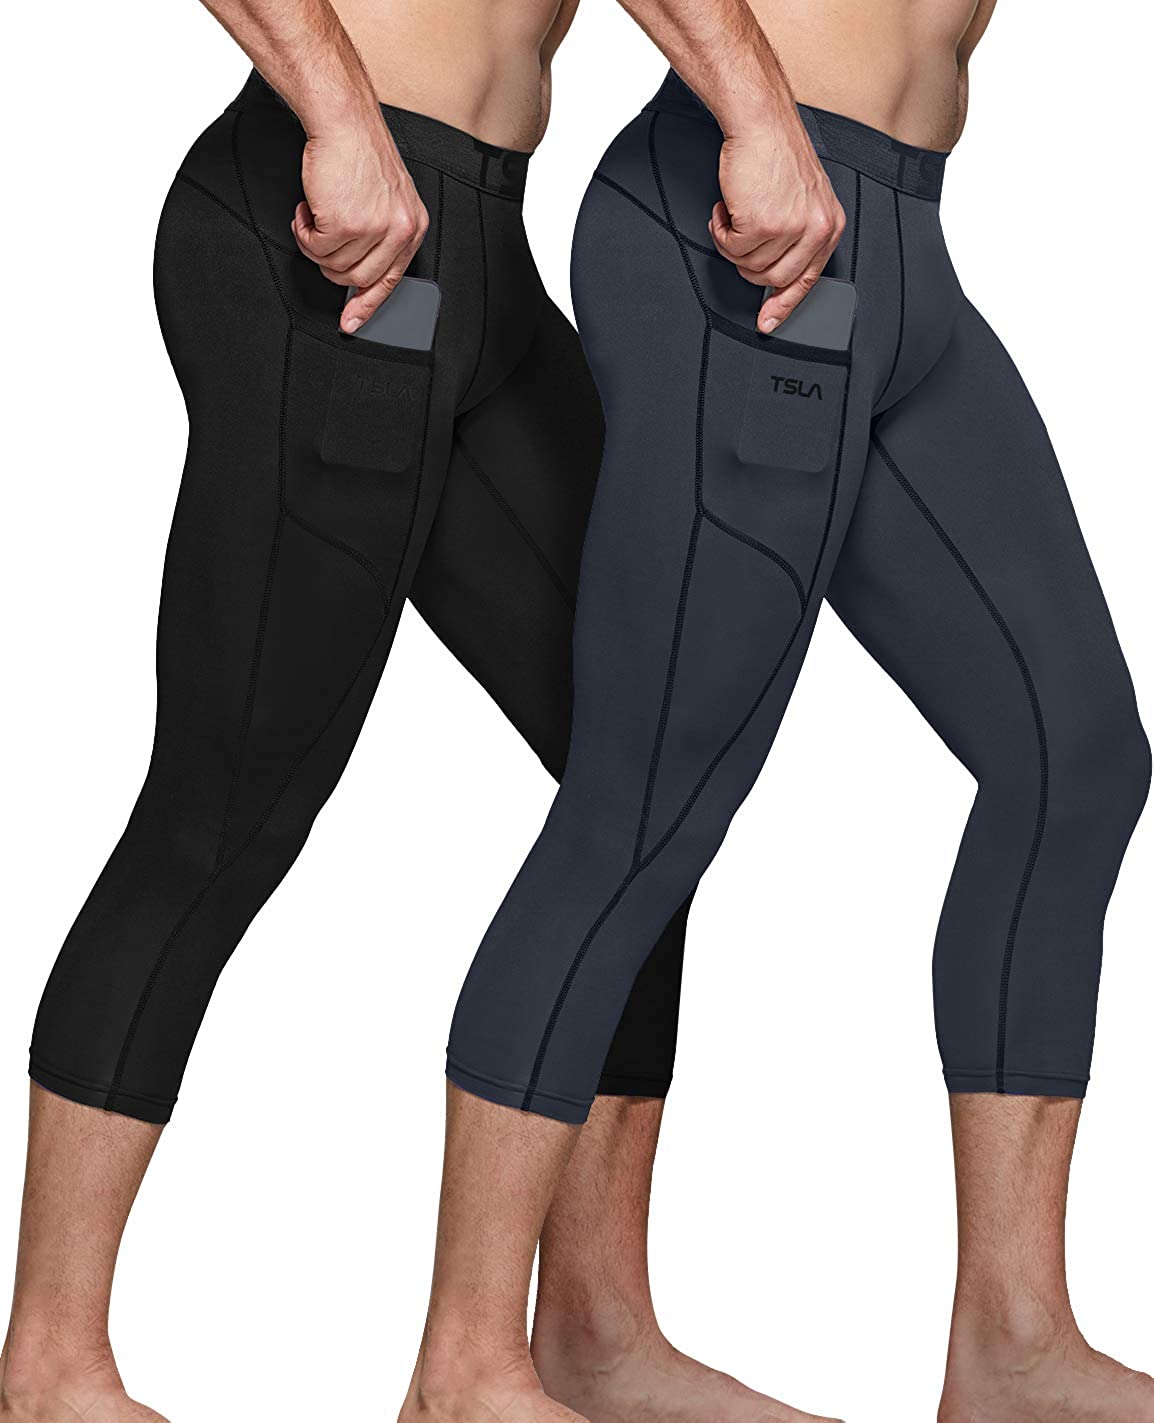 TSLA 1 or 2 Pack Men's 3/4 Compression Pants, Running Workout 